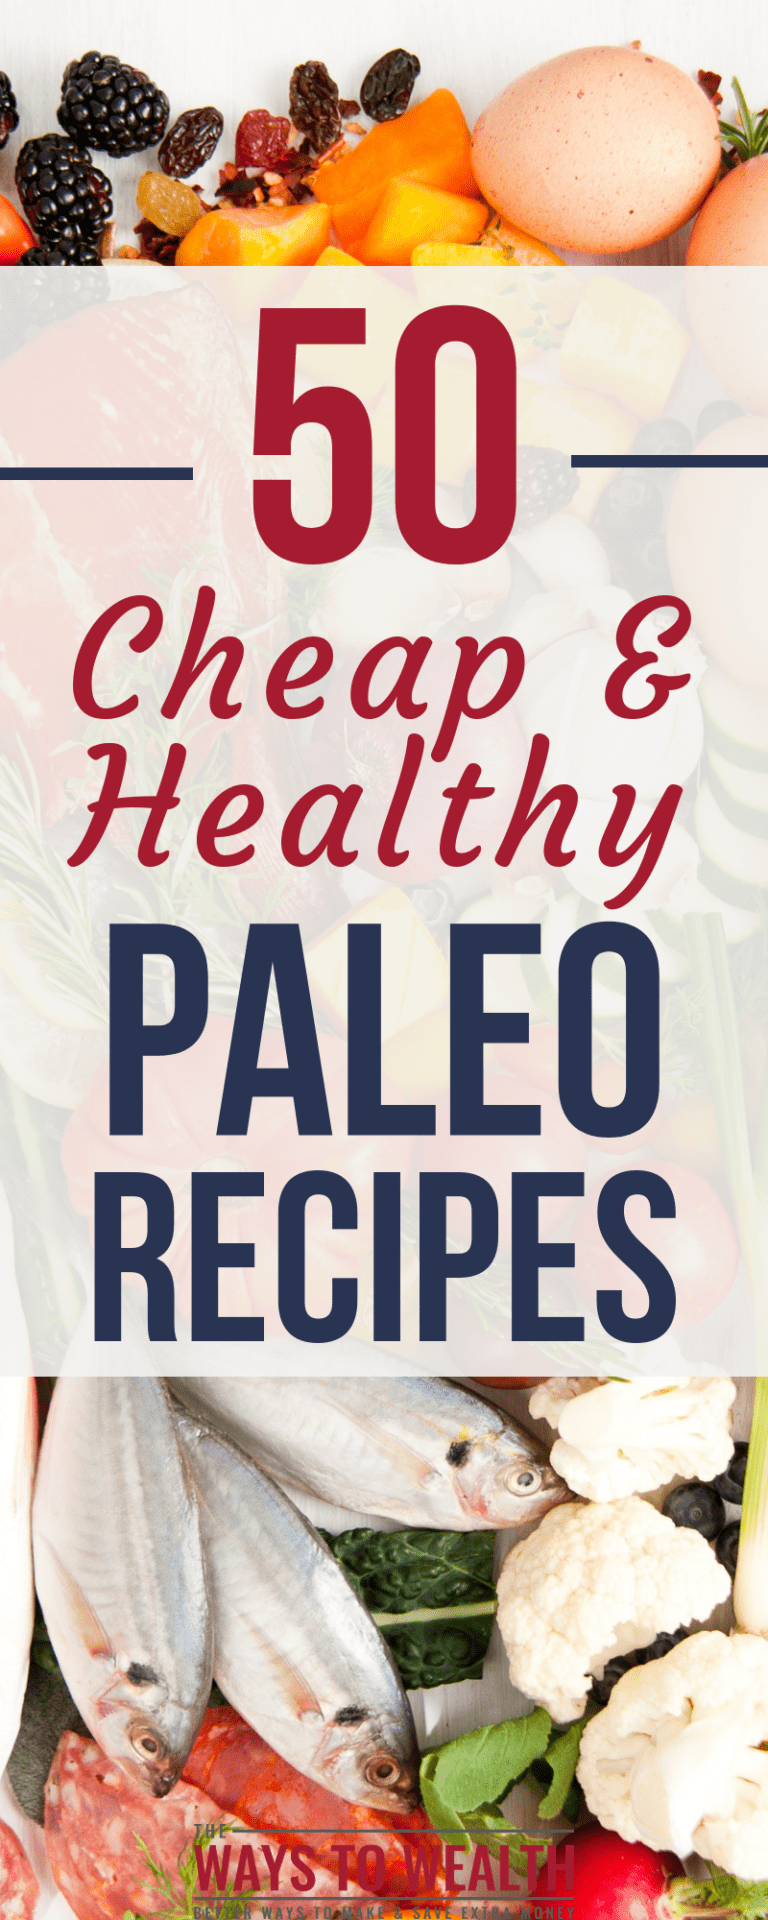 50+ Budget Friendly, Low-Carb Paleo Meal Ideas -   15 healthy recipes On A Budget paleo ideas